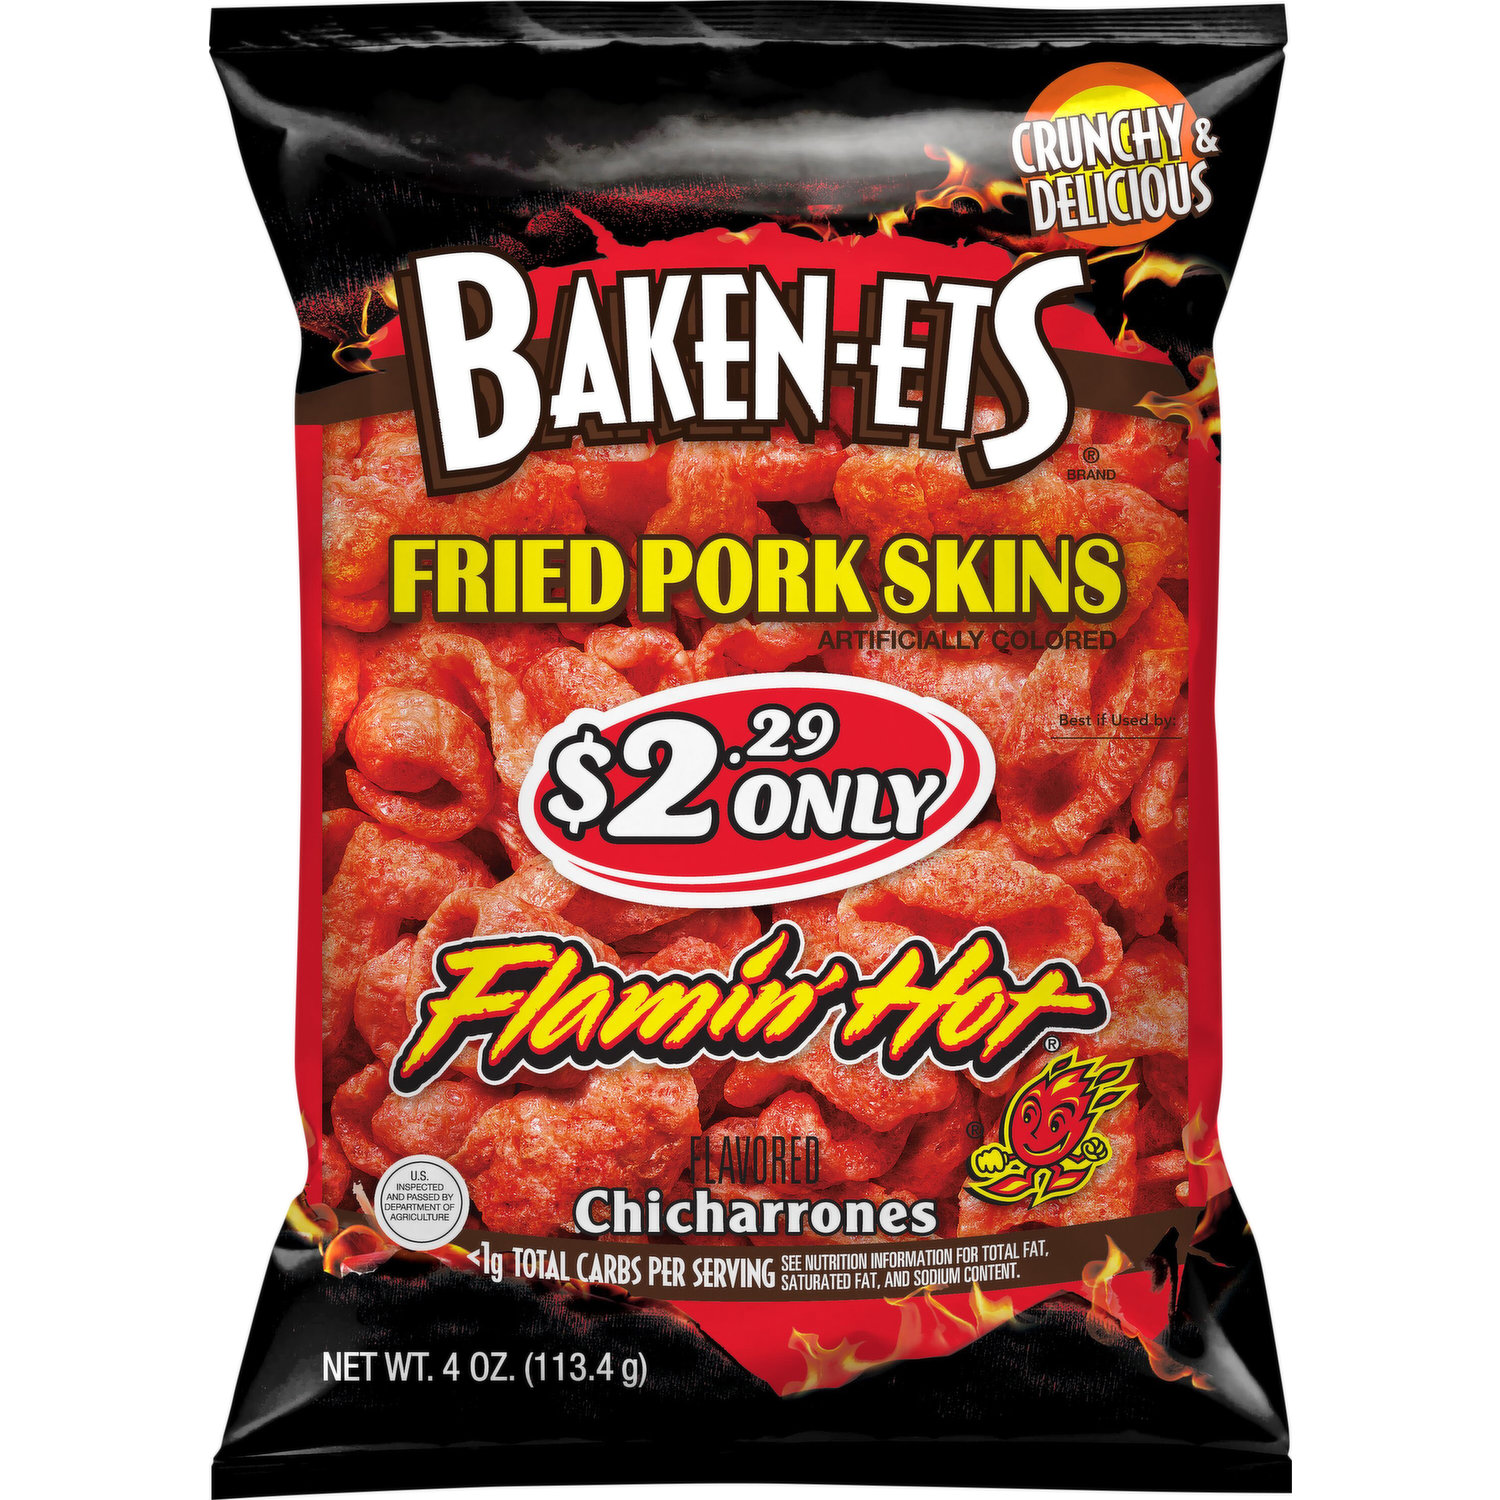 Baken-Ets Fried Pork Skins, Flamin' Hot Flavored, Chicharrones